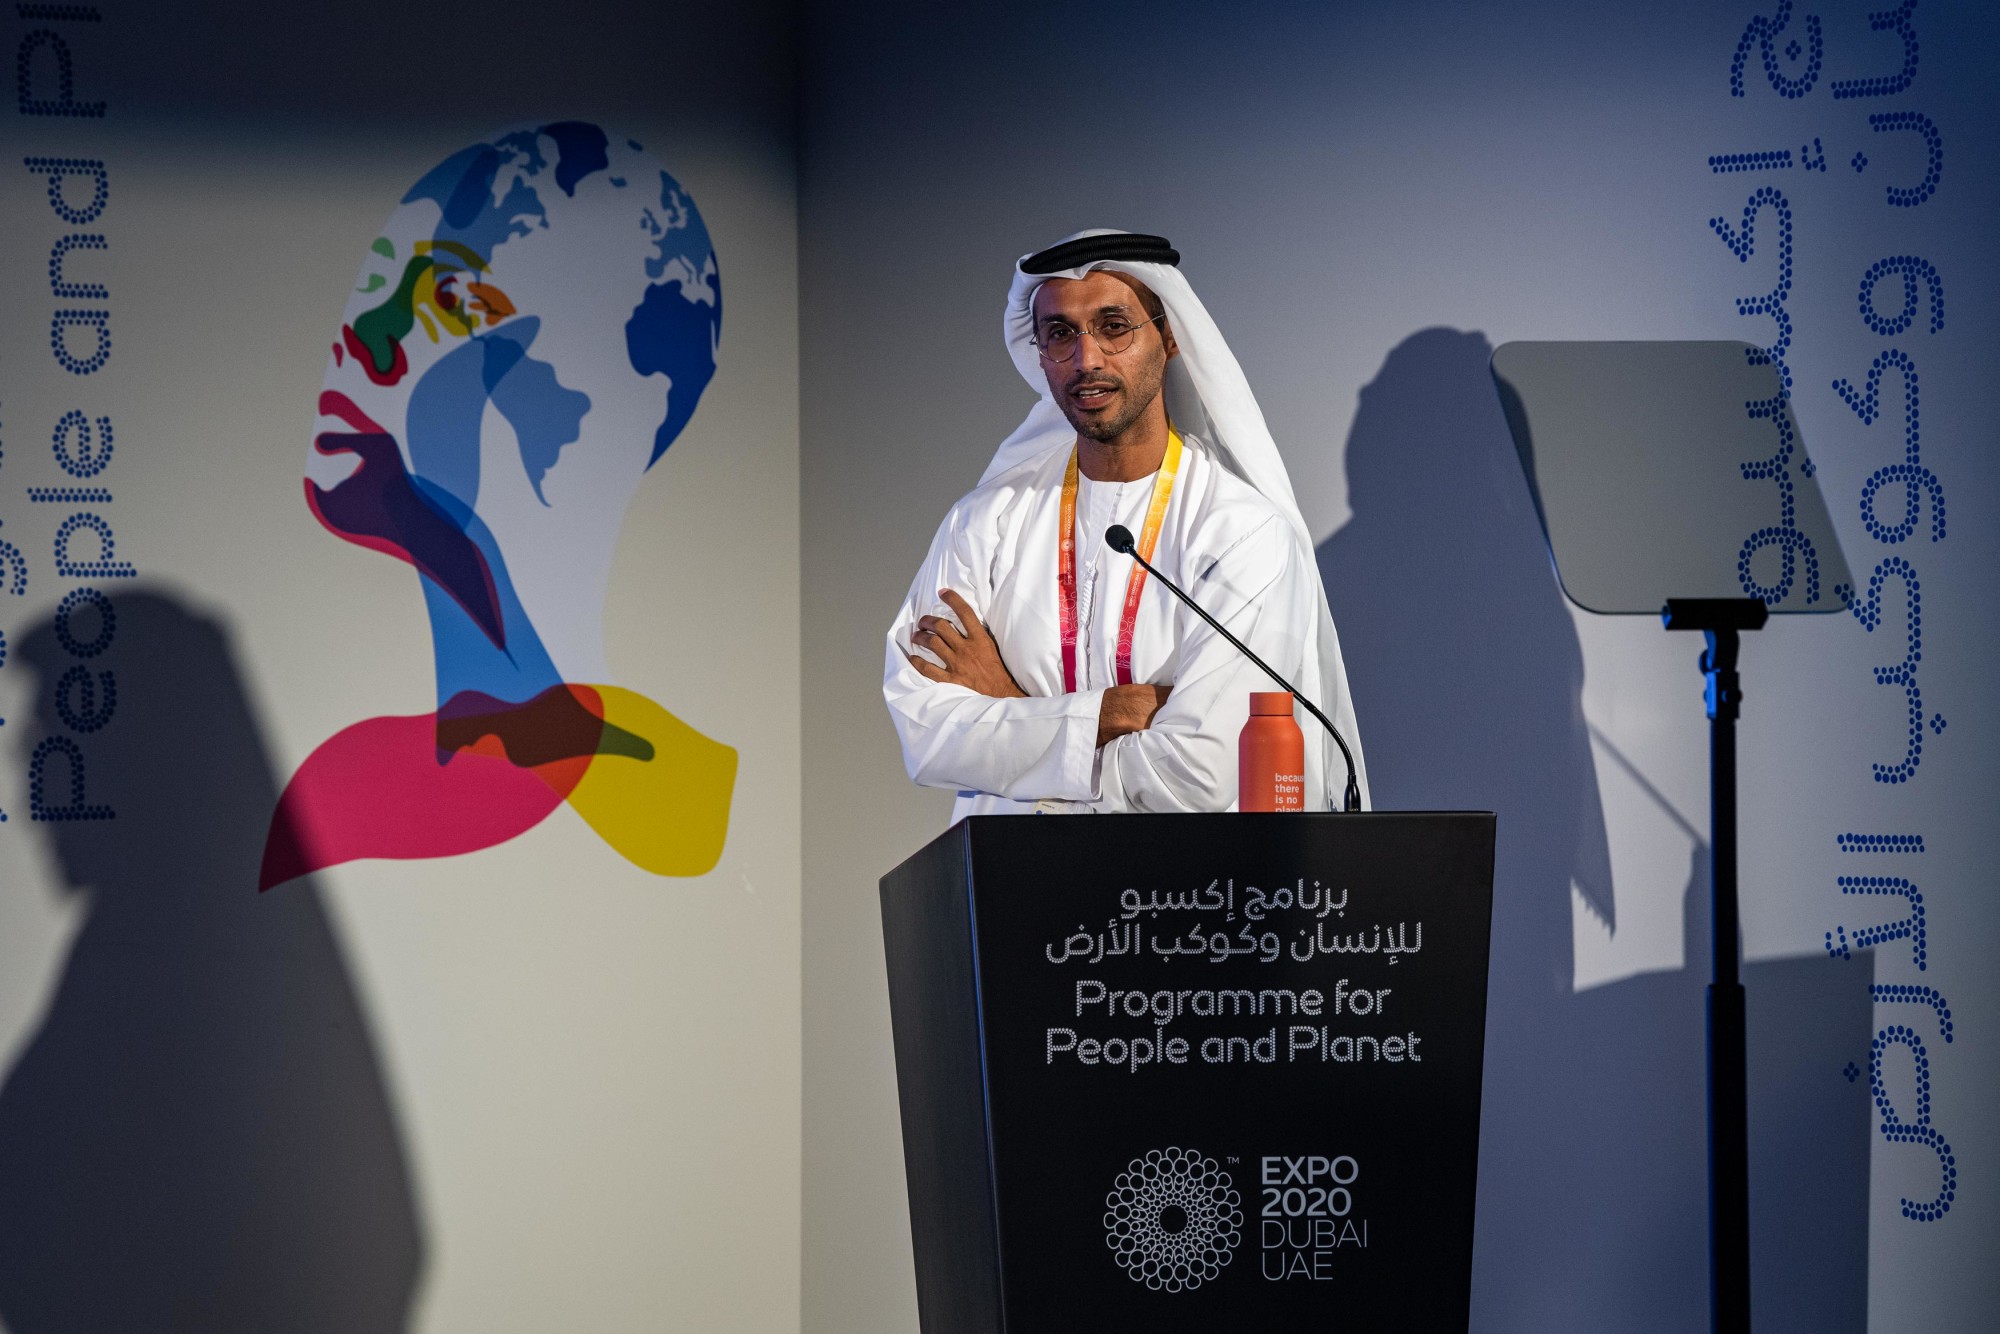 Urbanist Ahmed Bin Shabib speaks at the World Cities Day event m7590